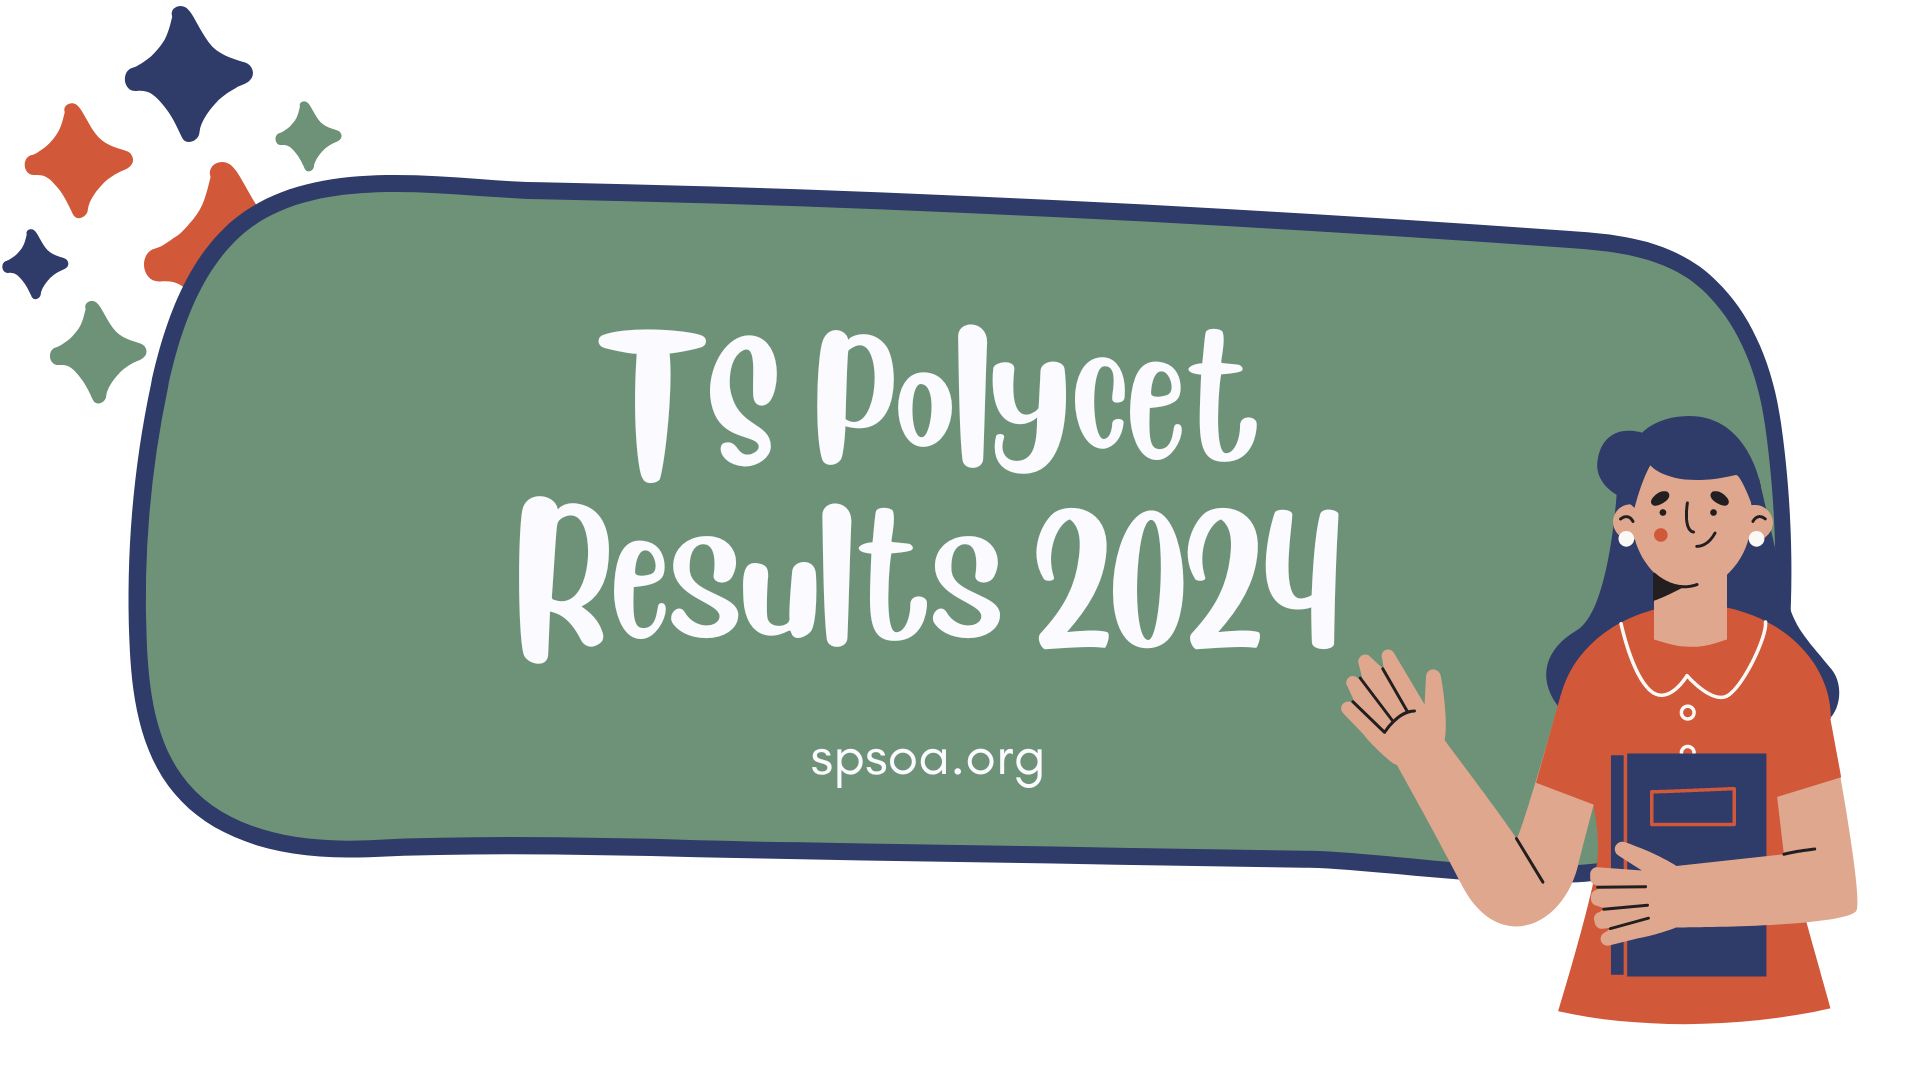 TS Polycet Results 2024